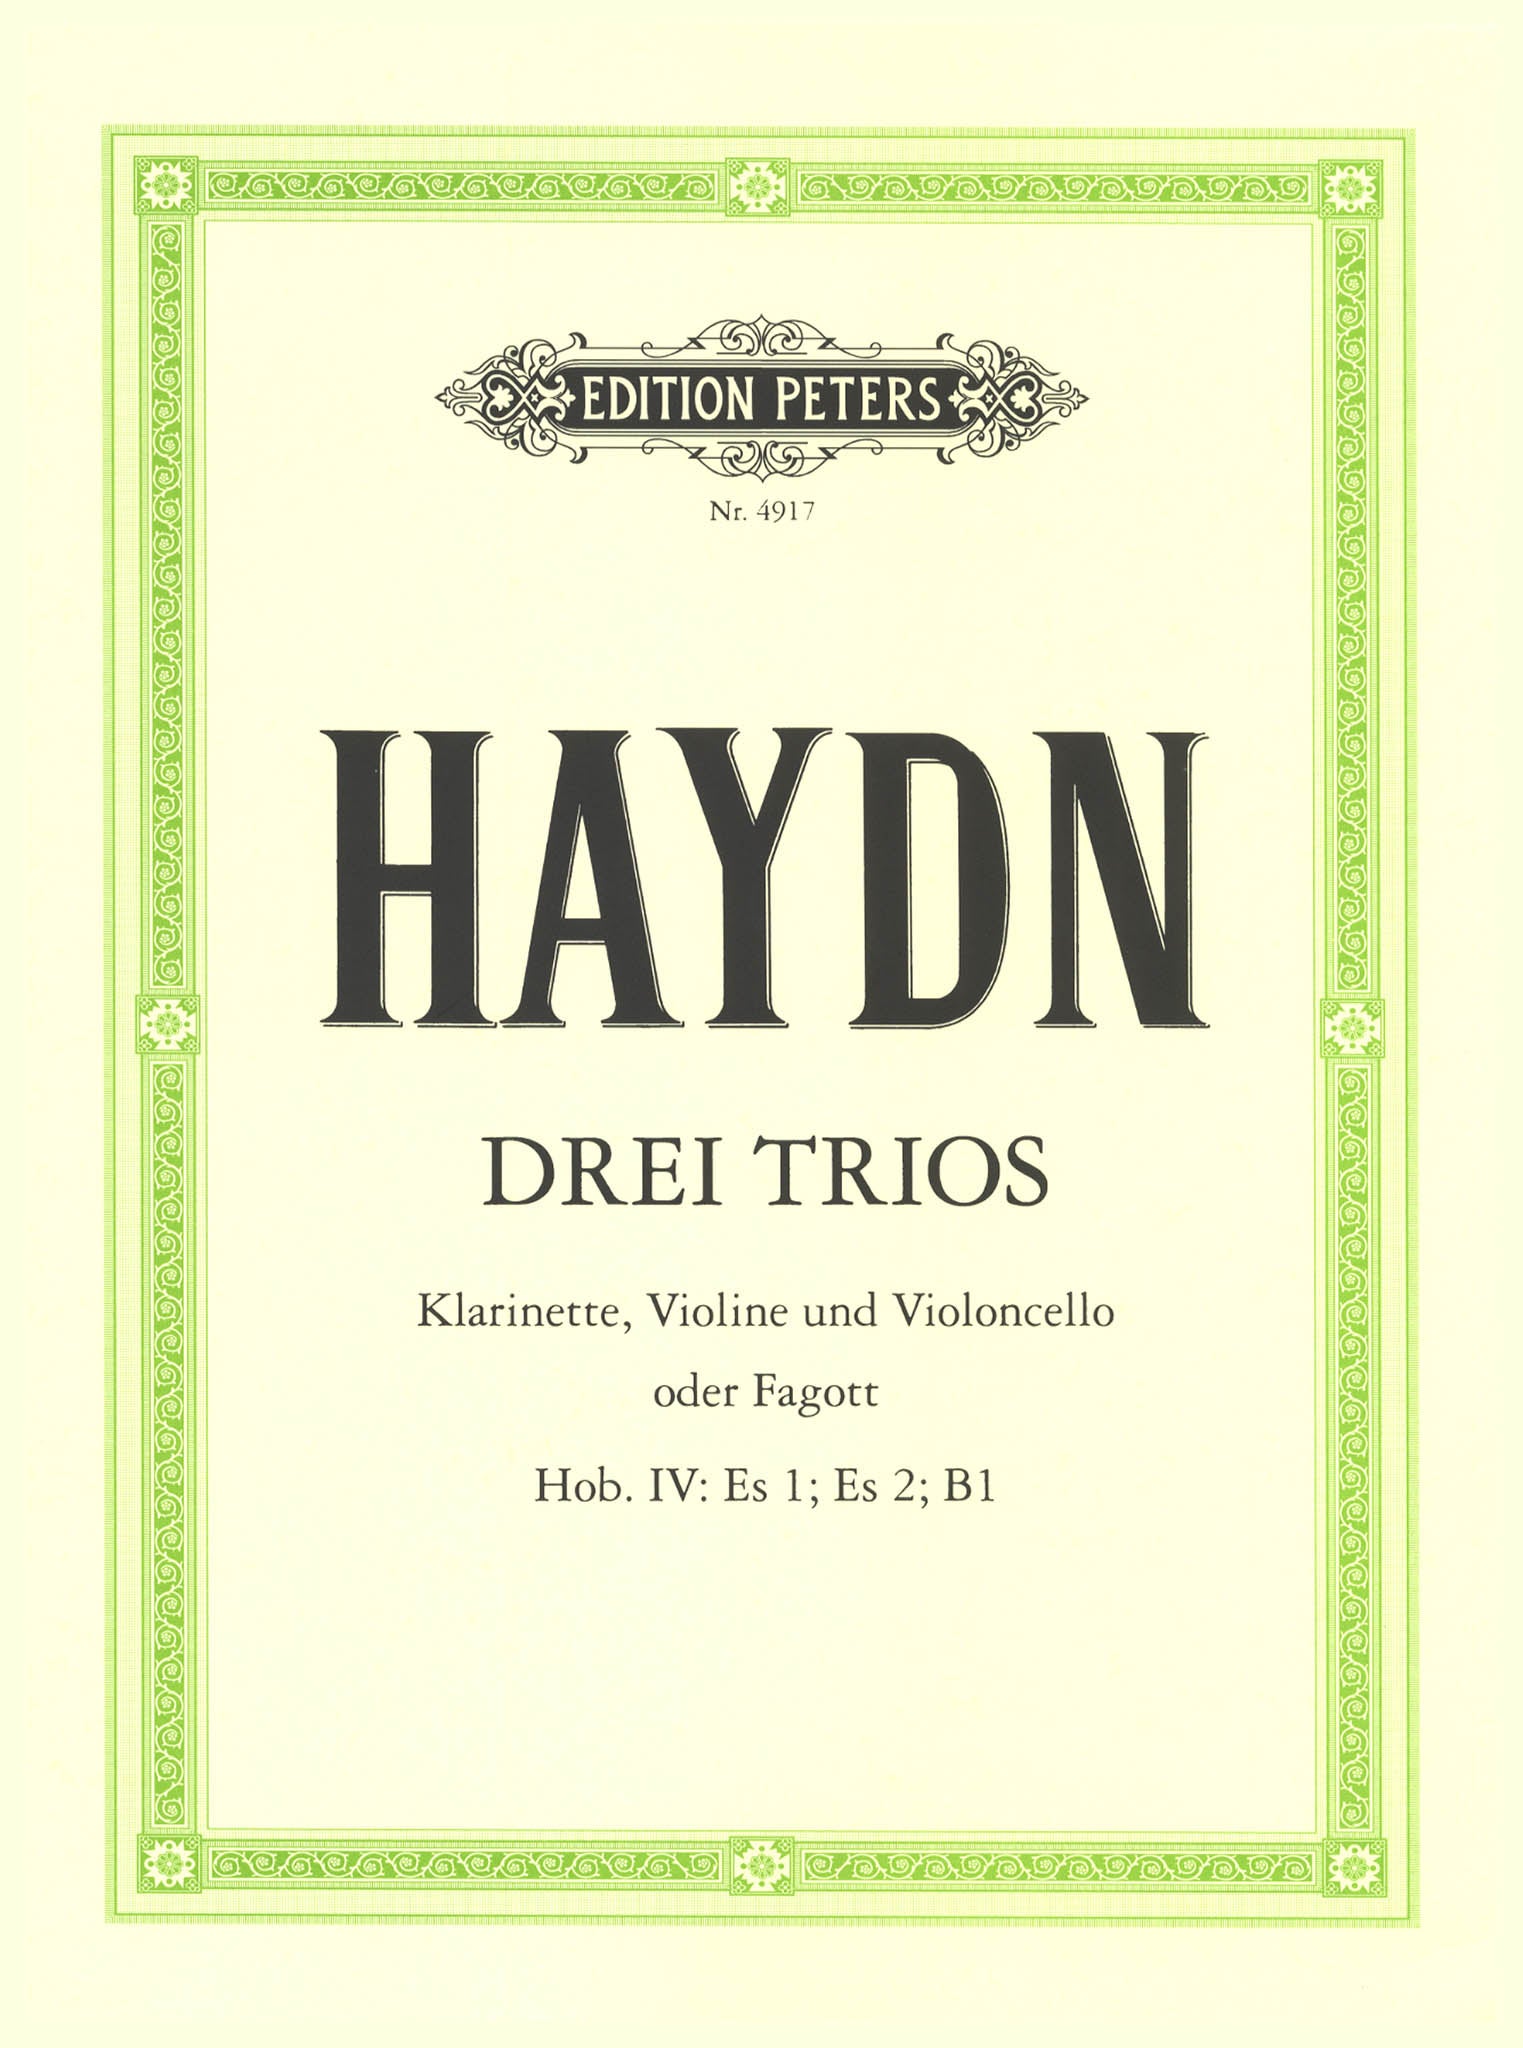 Haydn Clarinet Trio in E-flat Major, Hob. IV: Es2 cover